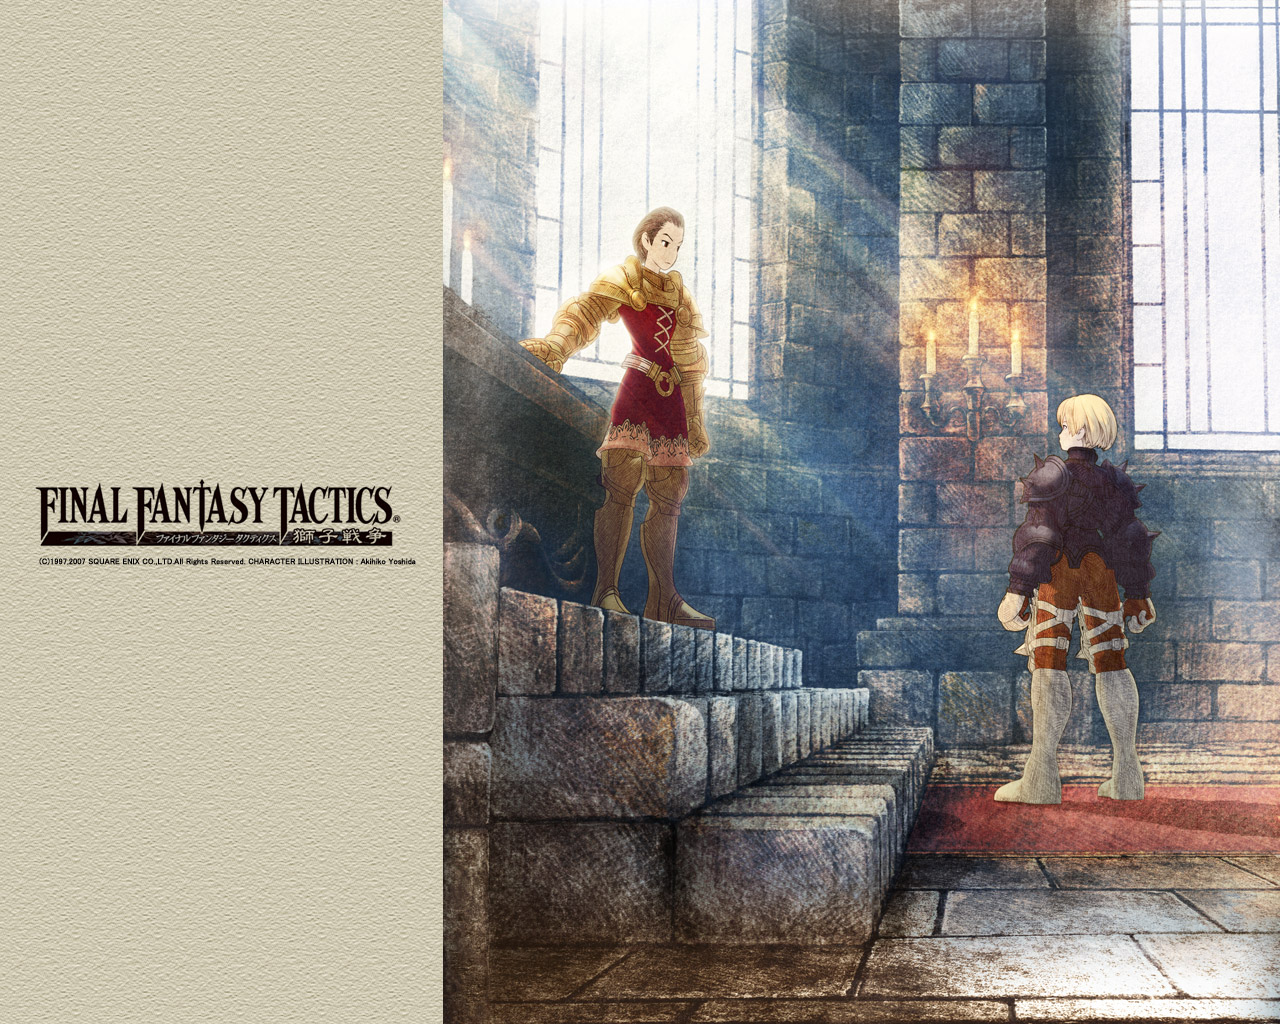 Final Fantasy Tactics Video games PlayStation Final Fantasy HD Wallpapers   Desktop and Mobile Images  Photos